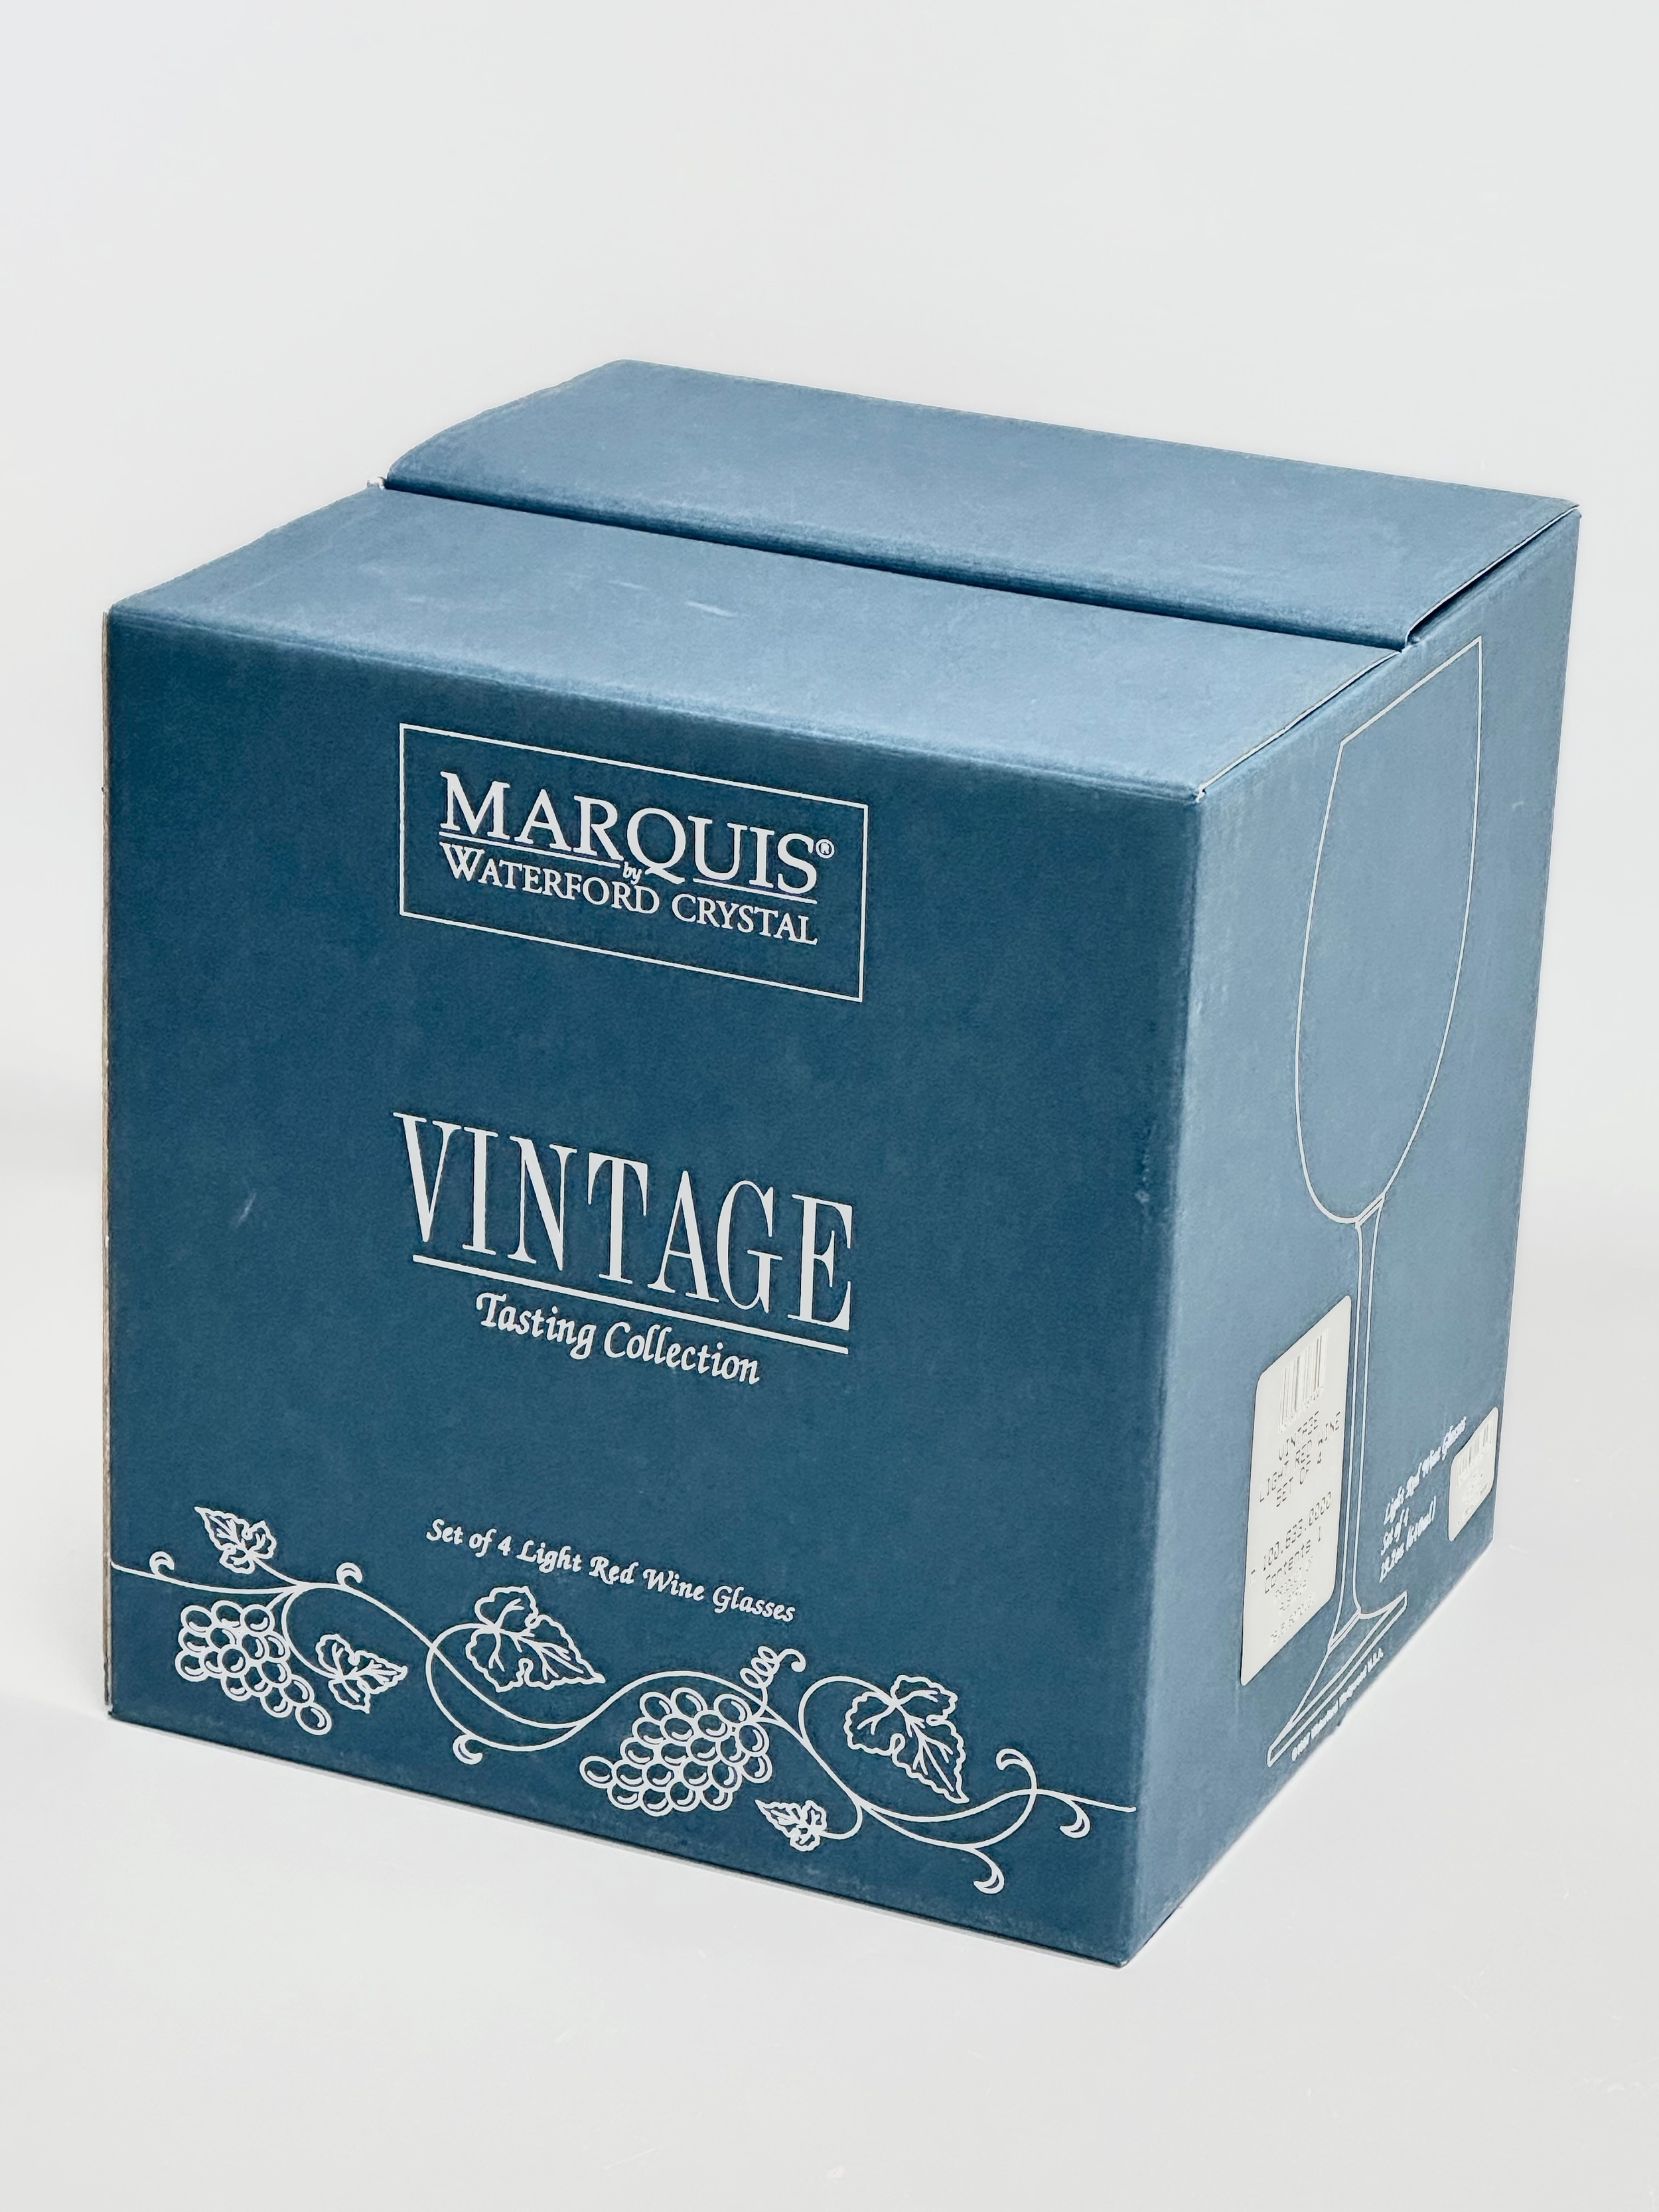 Waterford Marquis. The ‘Vintage Tasting Collection’ wine glasses by Waterford Marquis. Glasses - Image 3 of 4